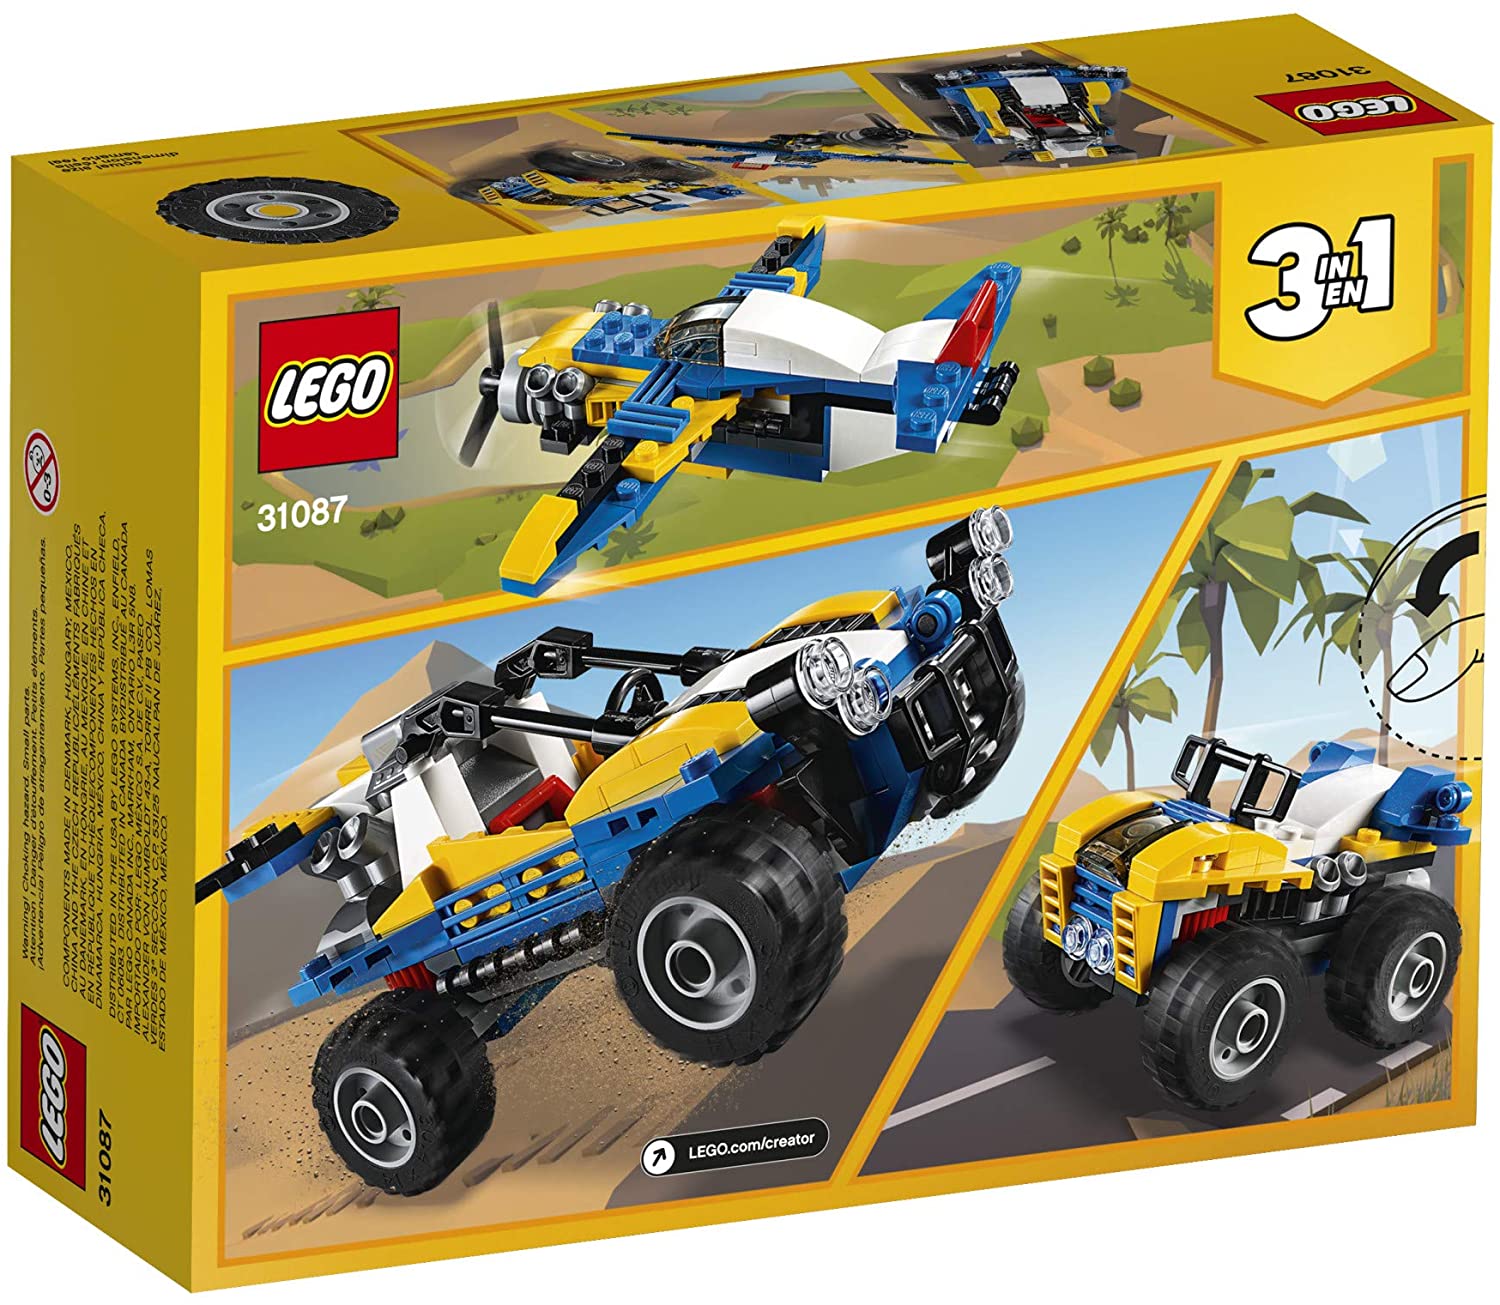 LEGO Creator 3in1 Dune Buggy 31087